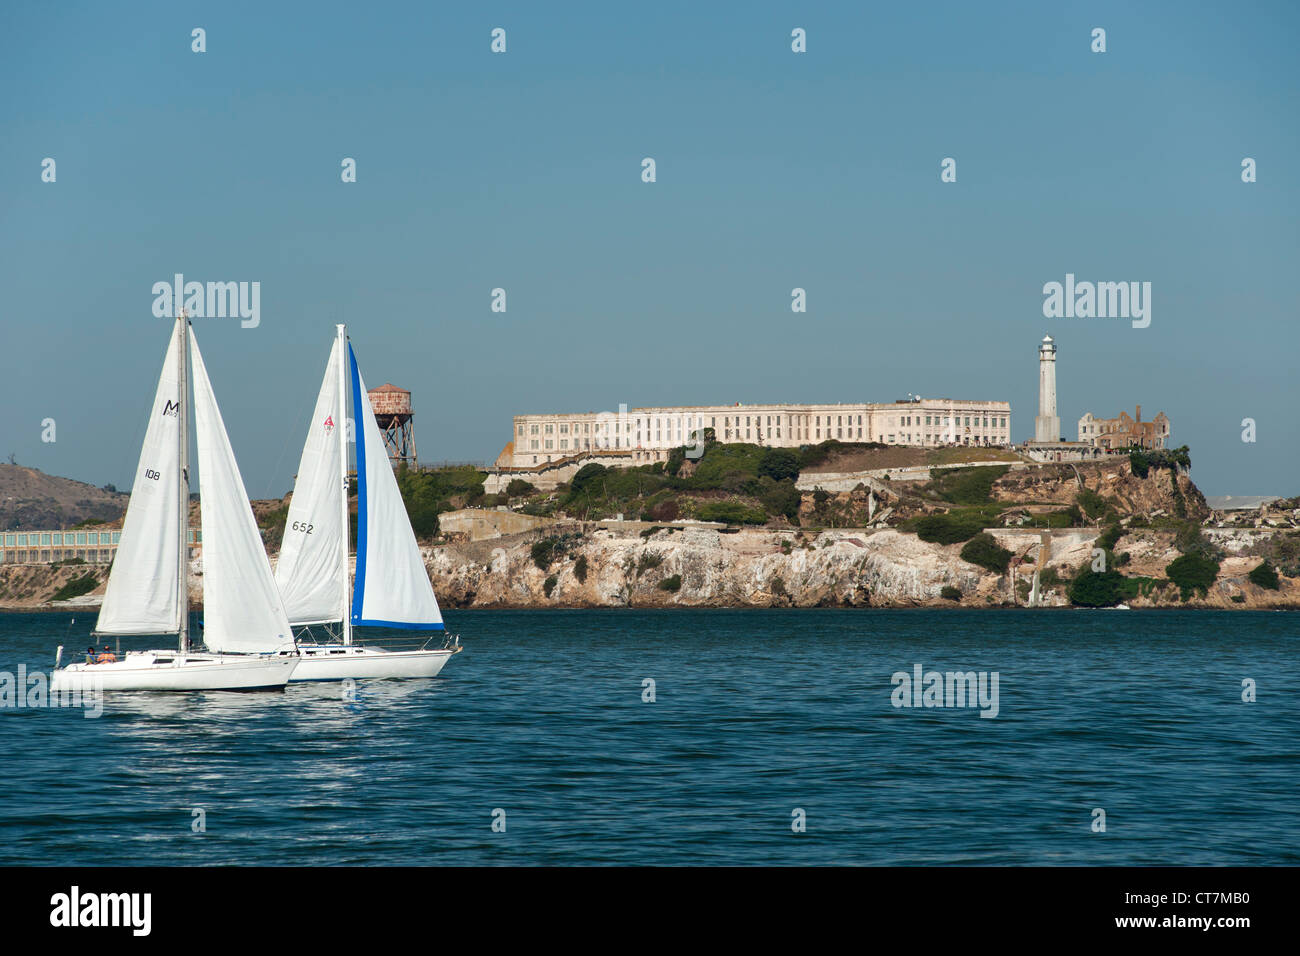 Sailing boats passing Alcatraz prison and Alcatraz island in the San Francisco Bay in California, USA. Stock Photo